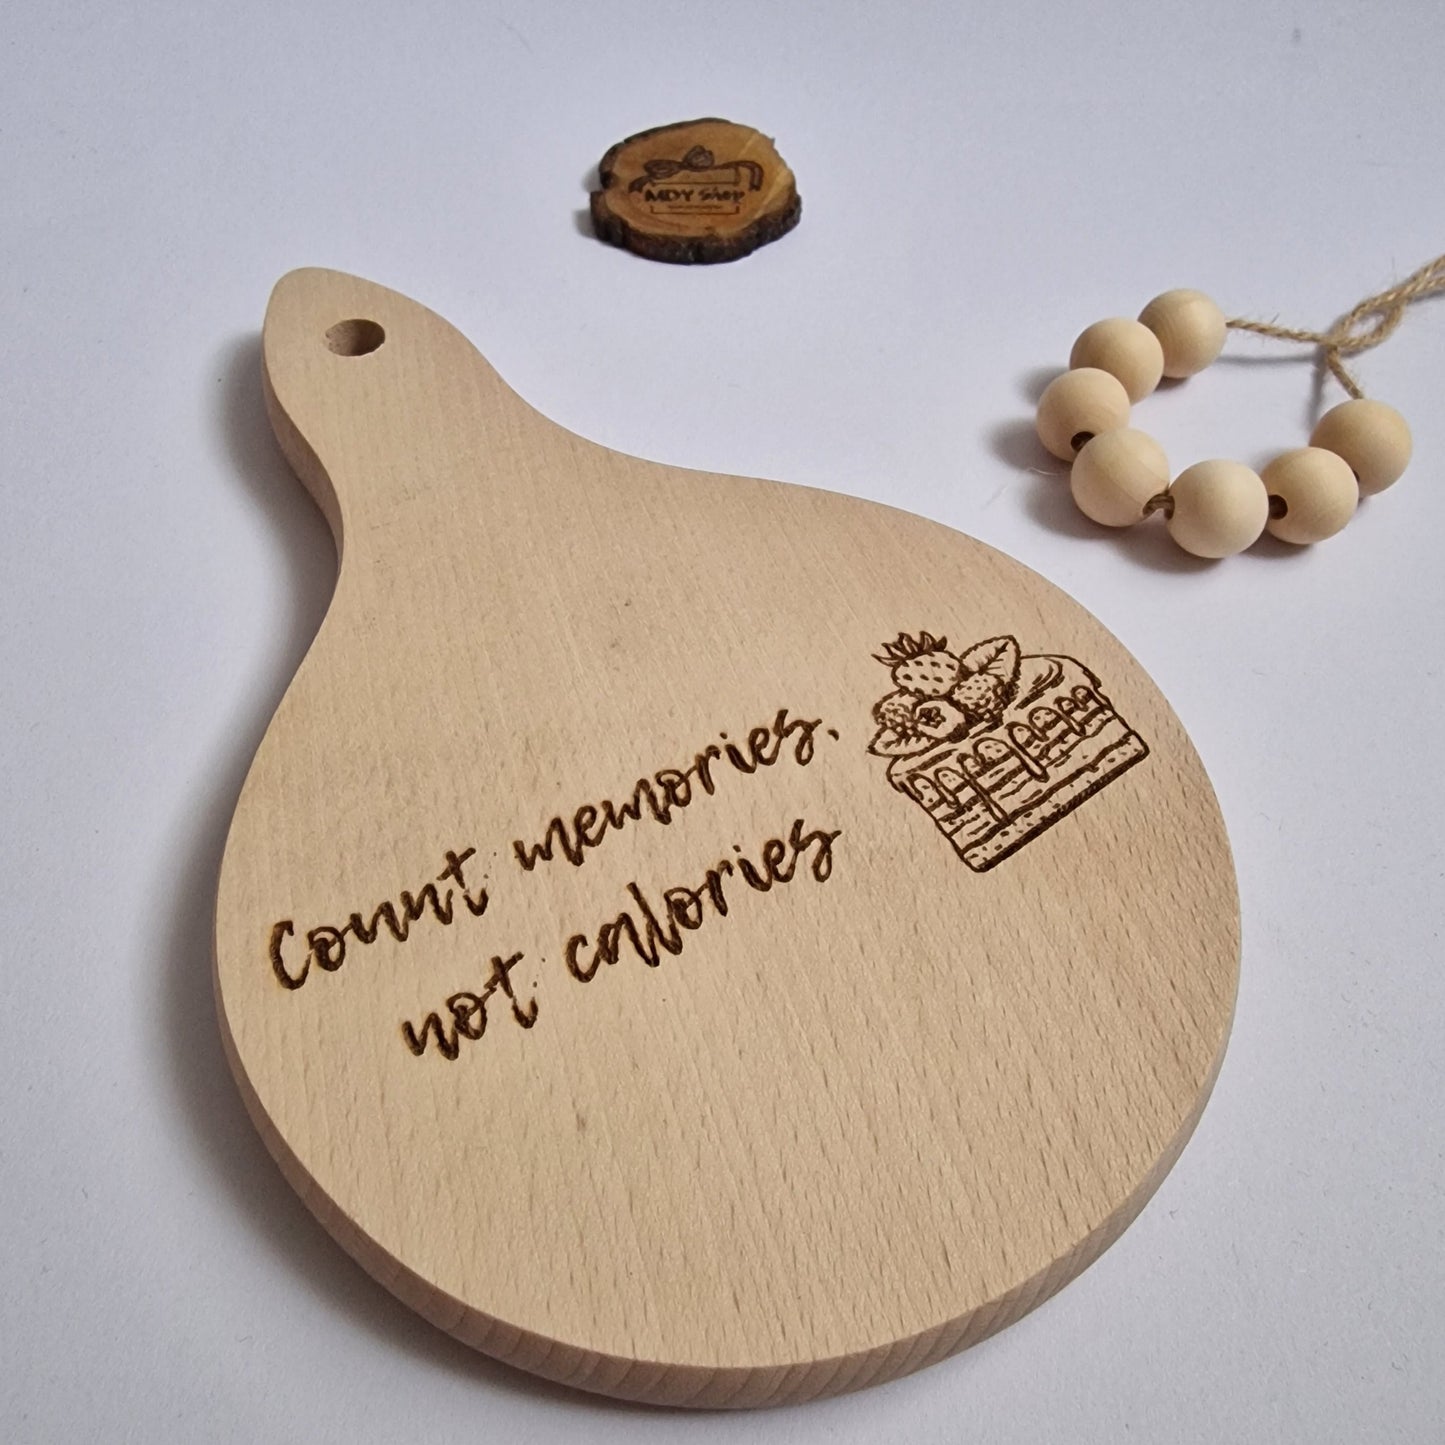 Tocător cu mâner din lemn gravat cu mesaj - ”Count memories, not calories”